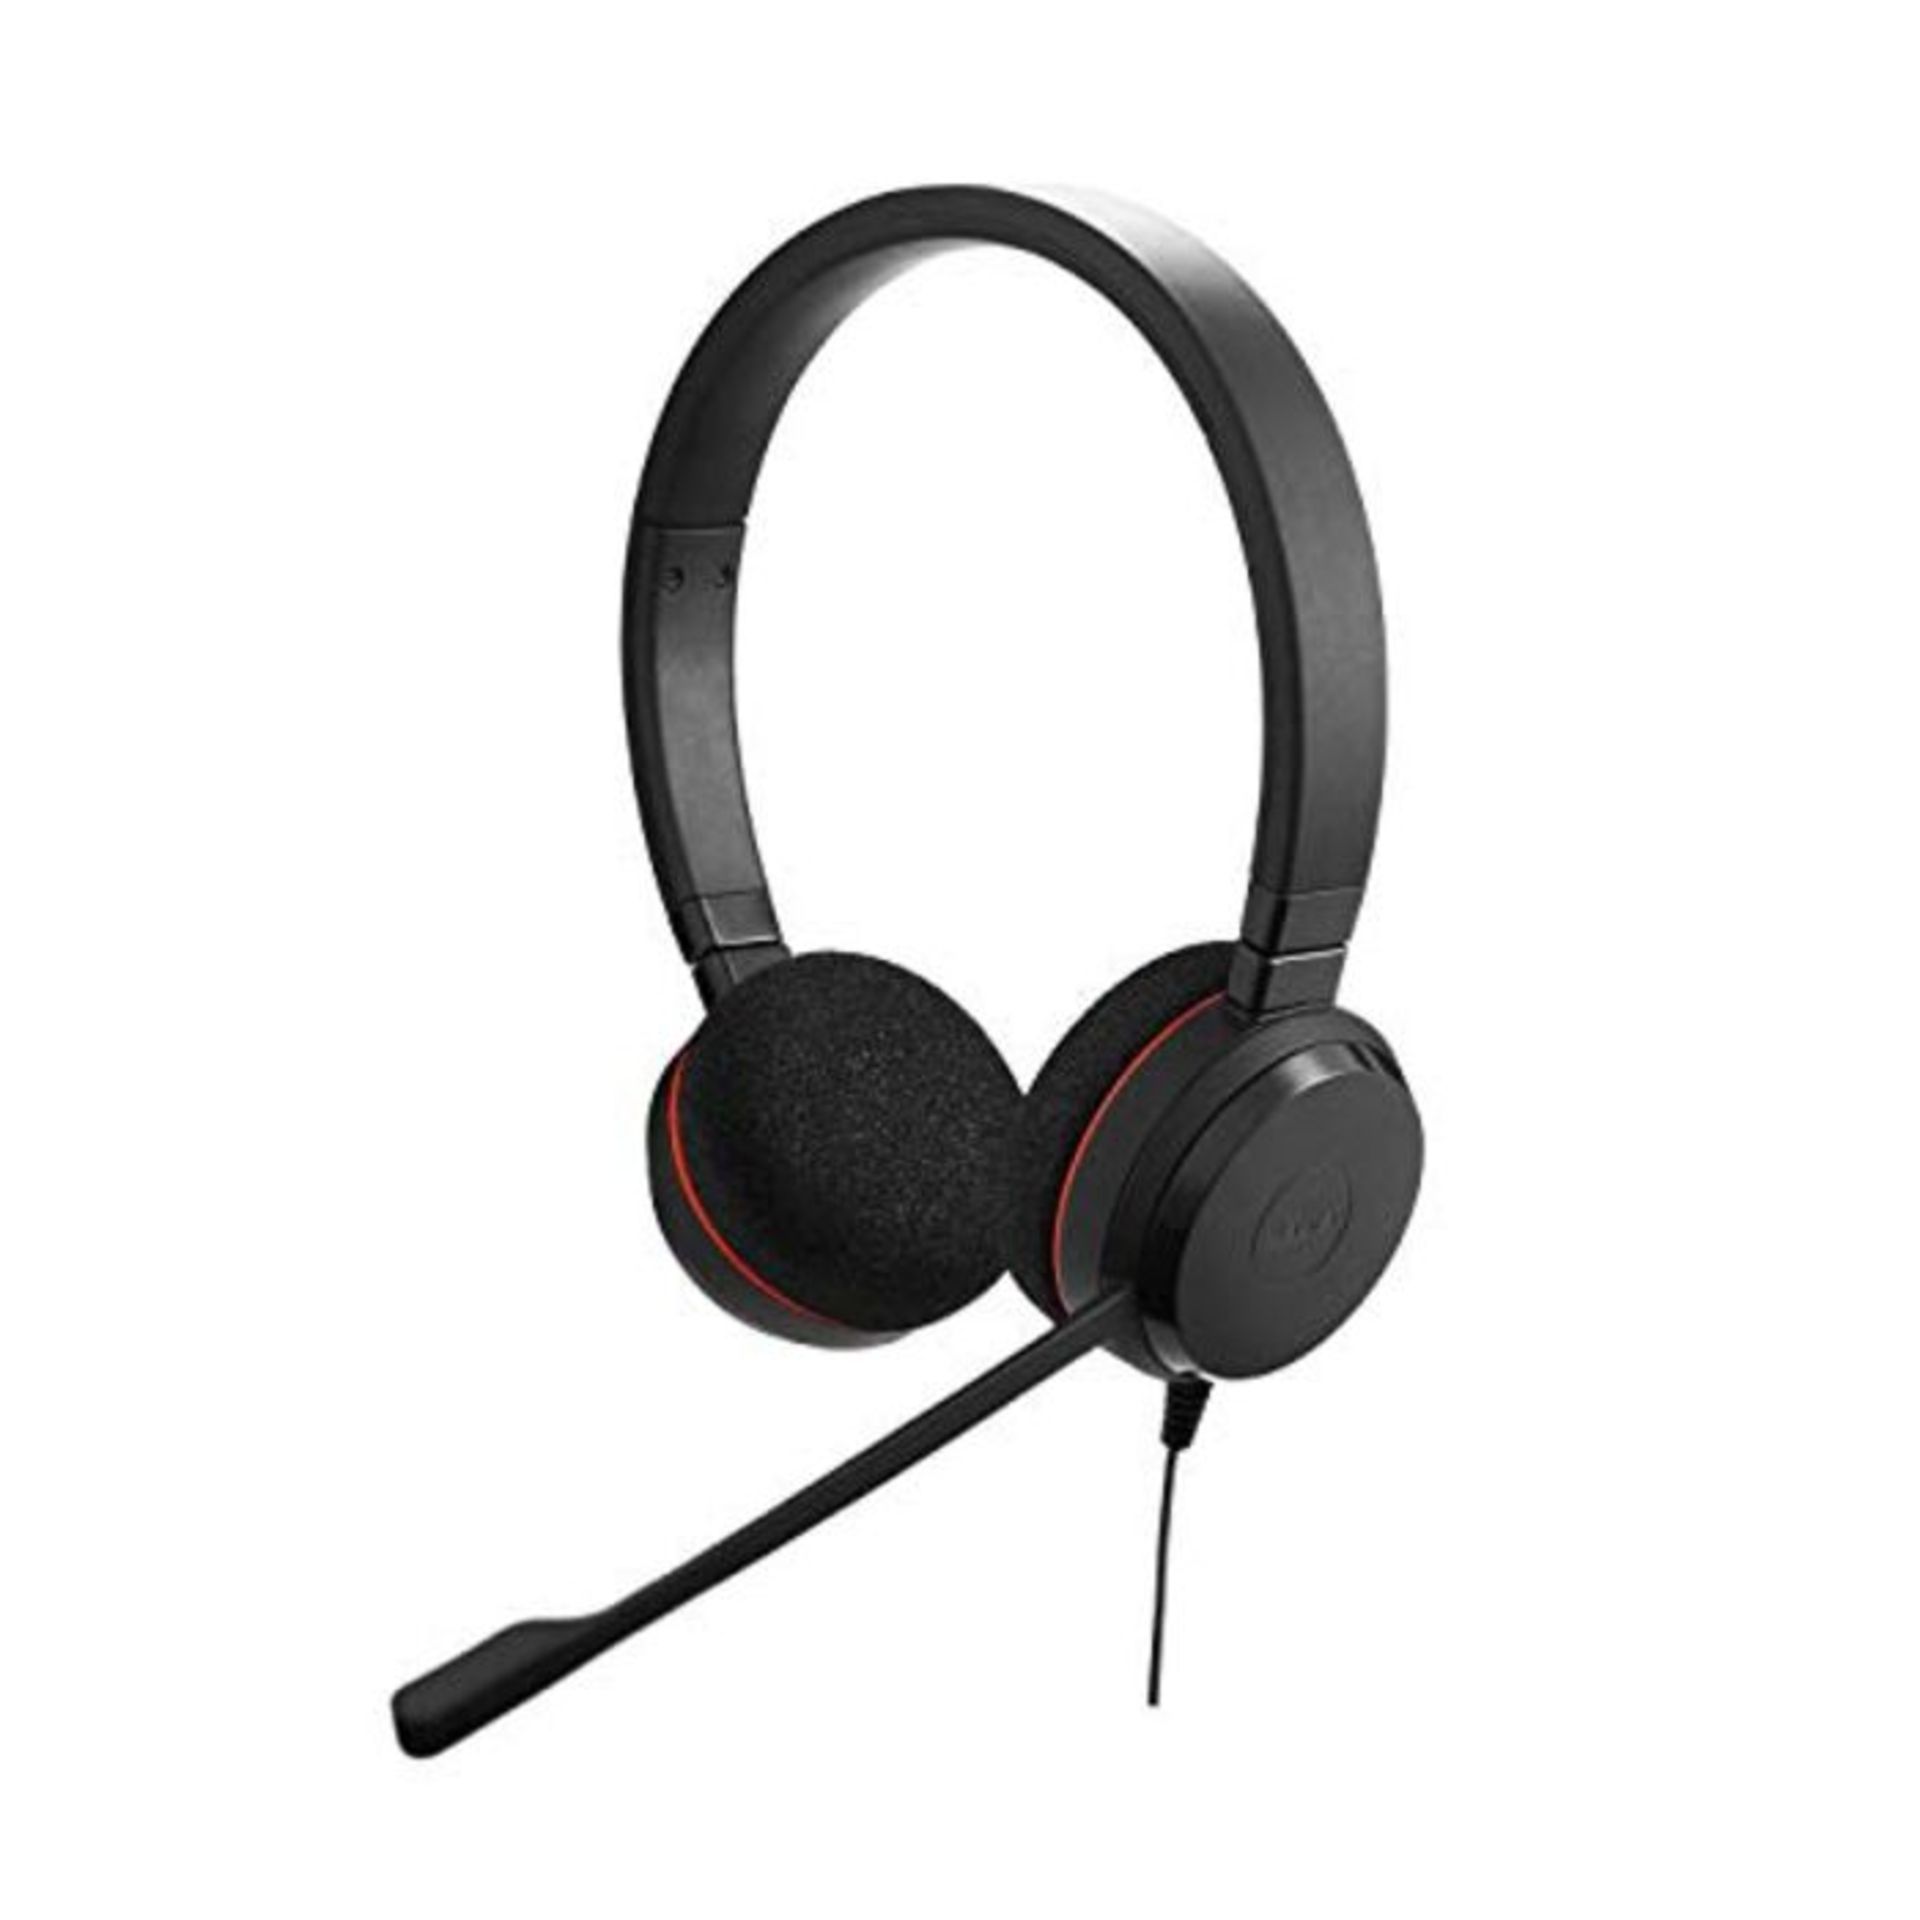 Jabra Evolve 20 SE Stereo Headset - Microsoft Certified Headphones for VoIP Softphone